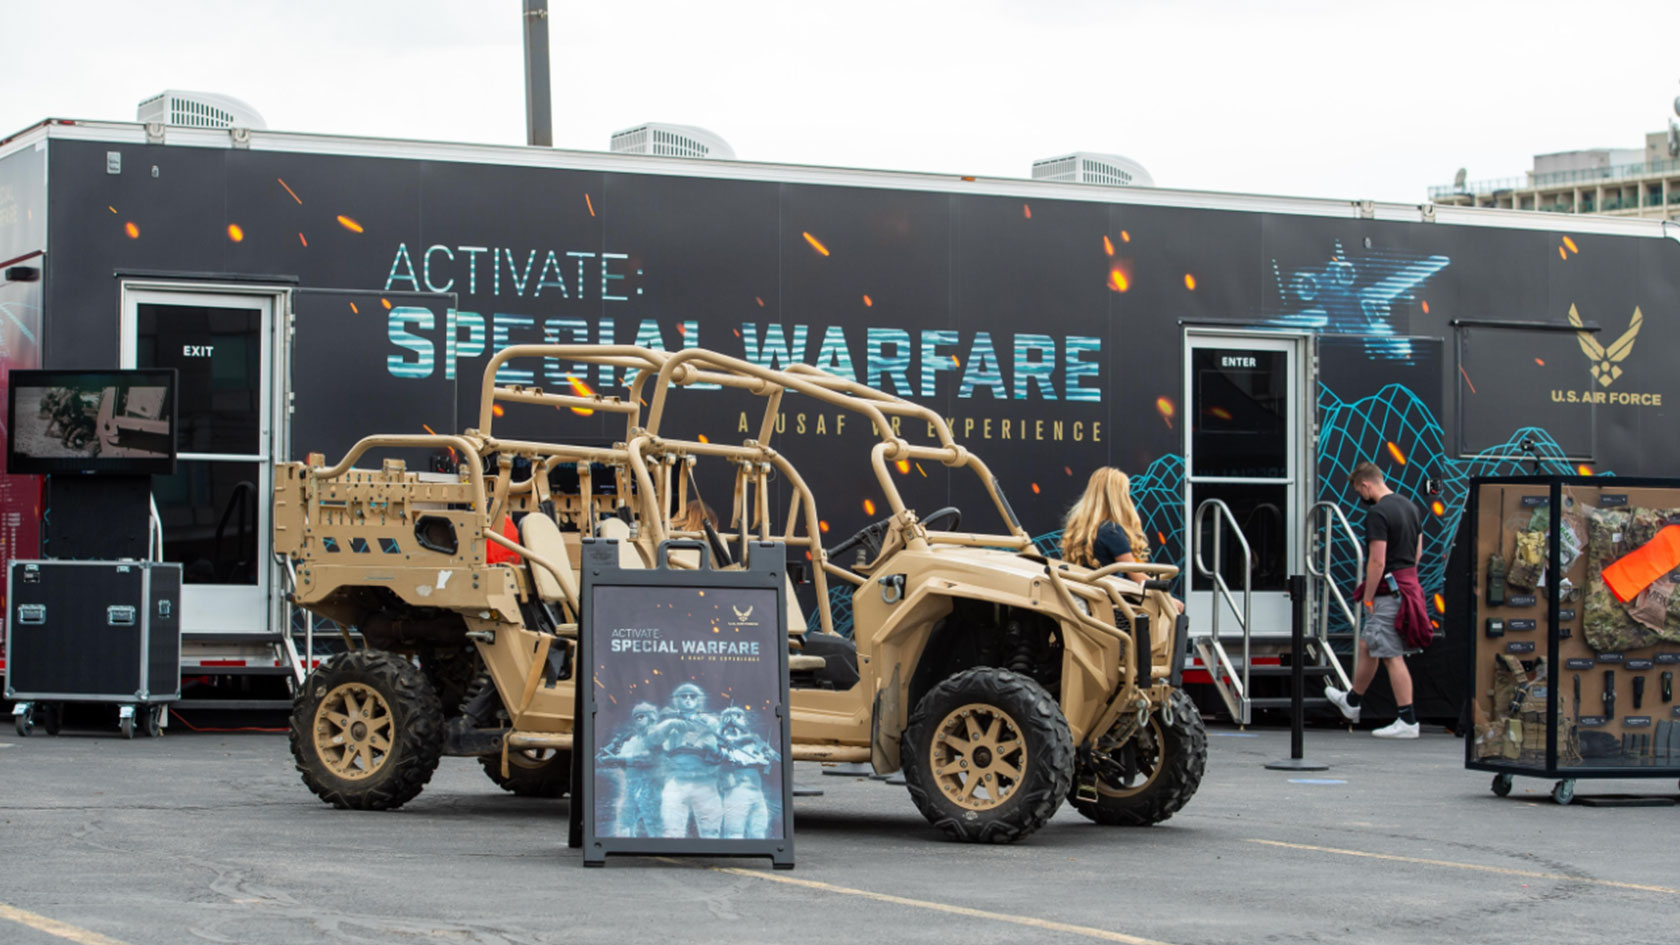 Activate Special Warfare experiential tour